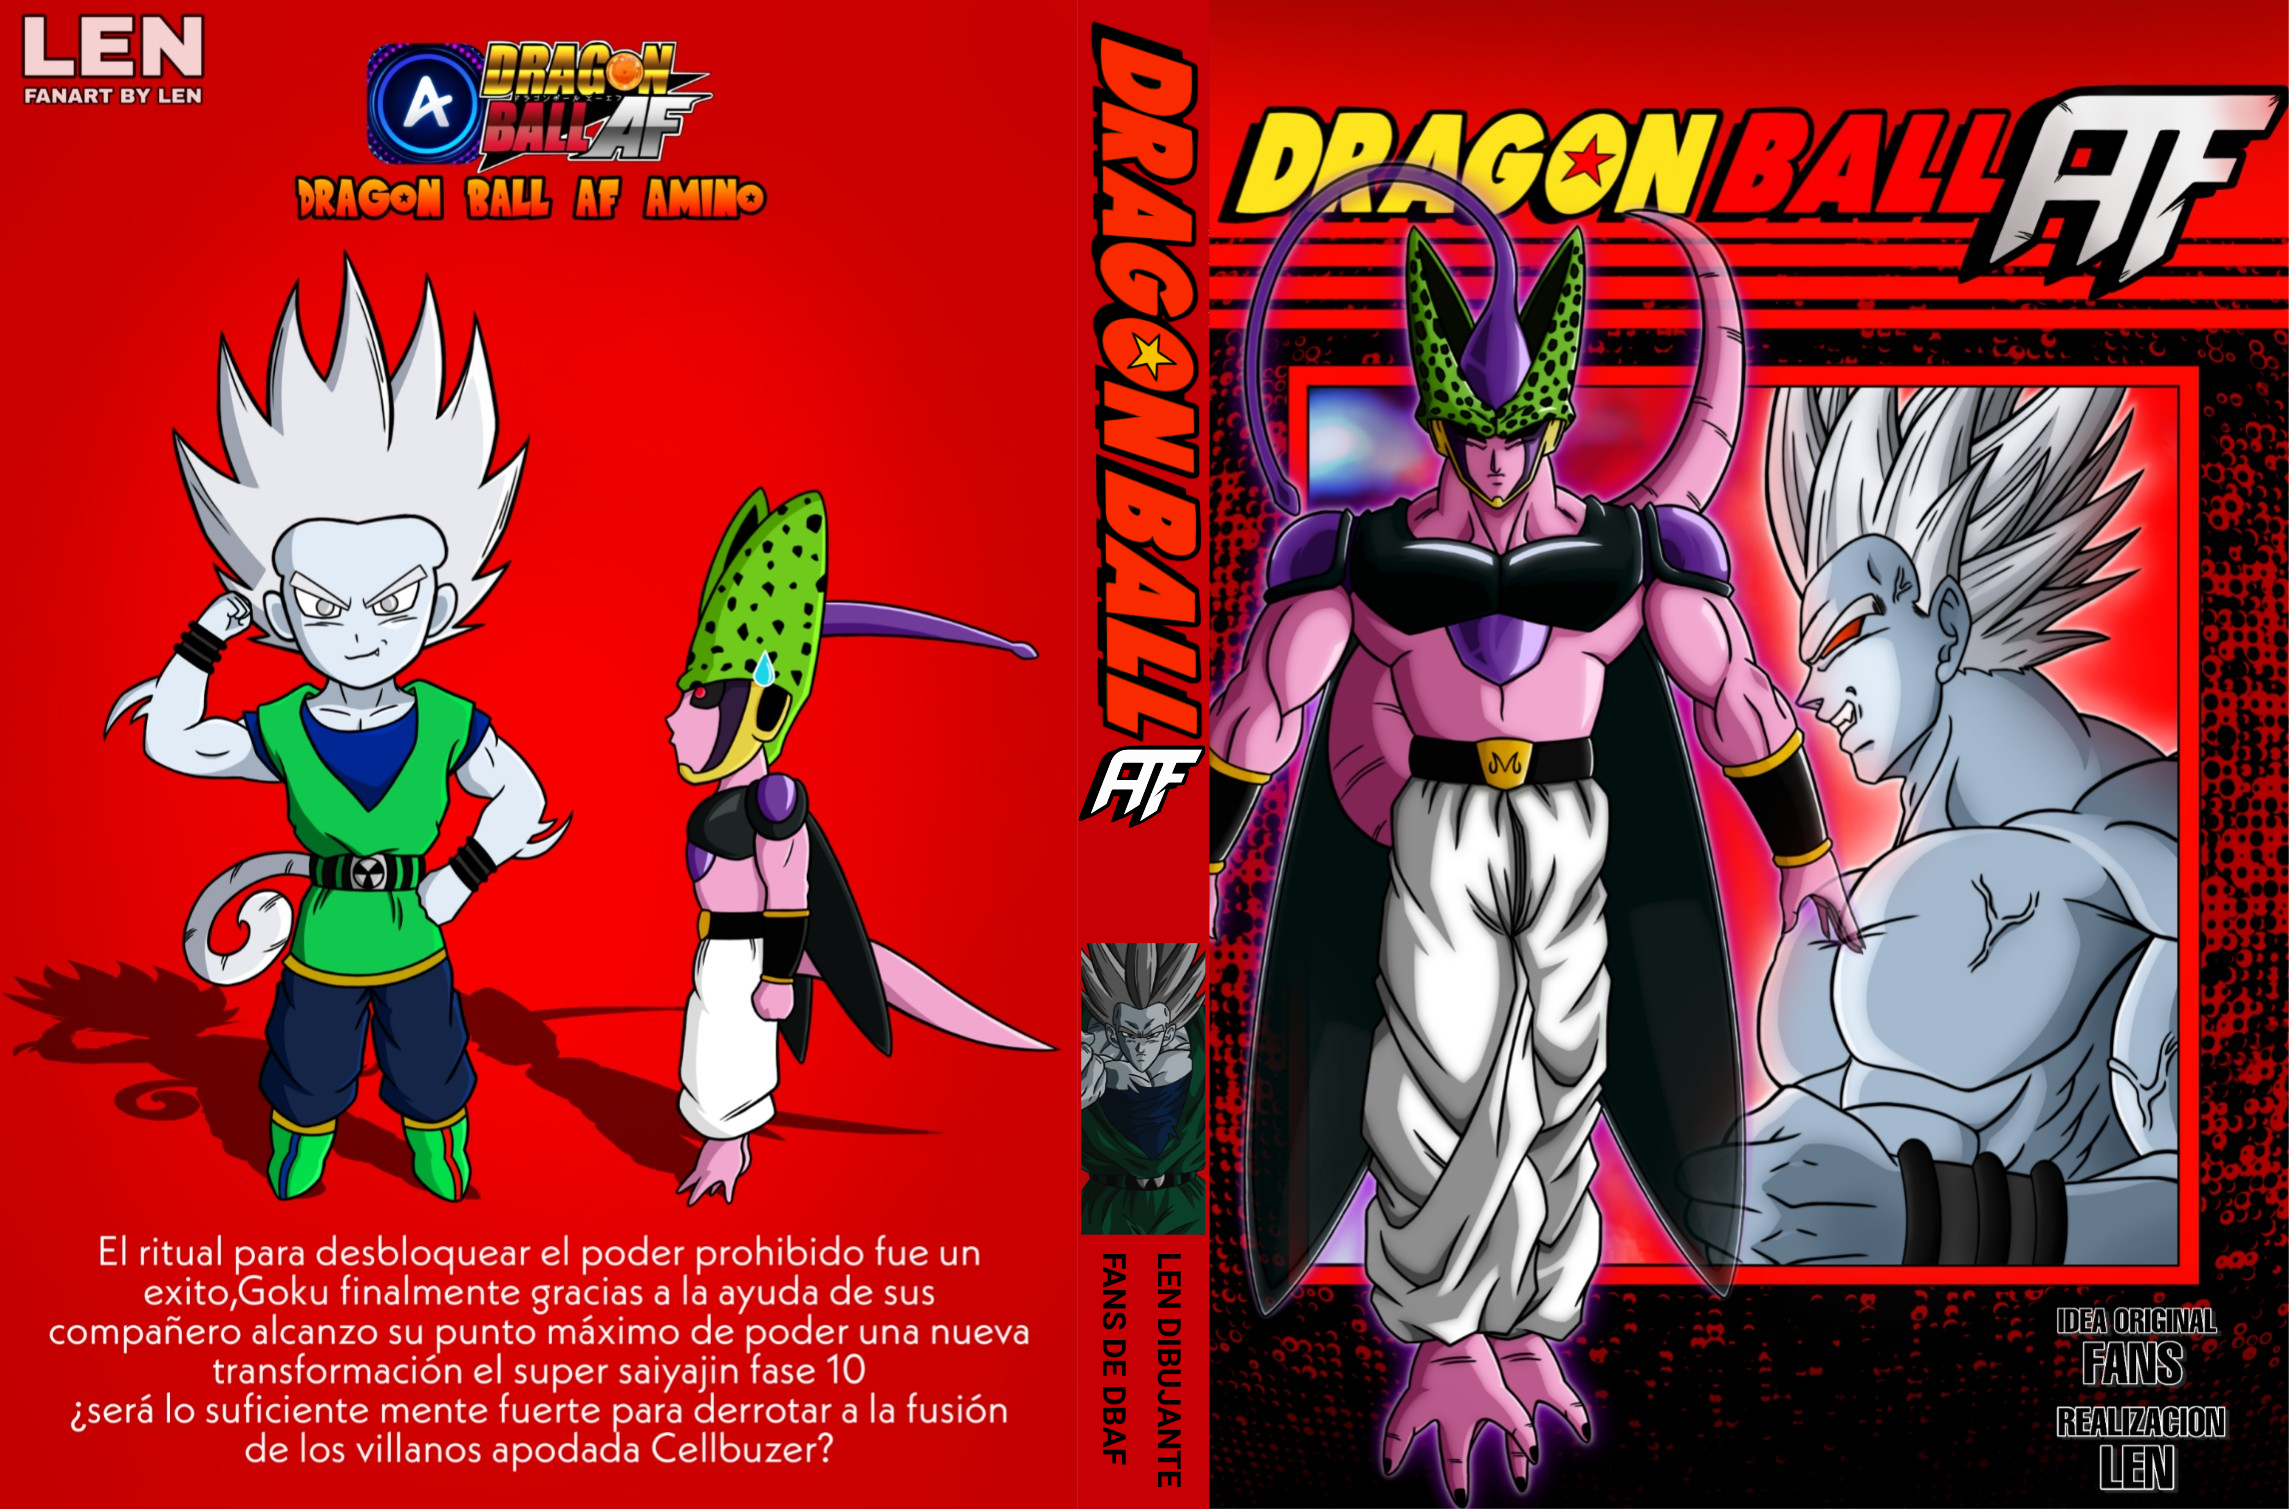 Dragon ball Af Manga portada Fanart by Len by LENDIBUJANTE on DeviantArt